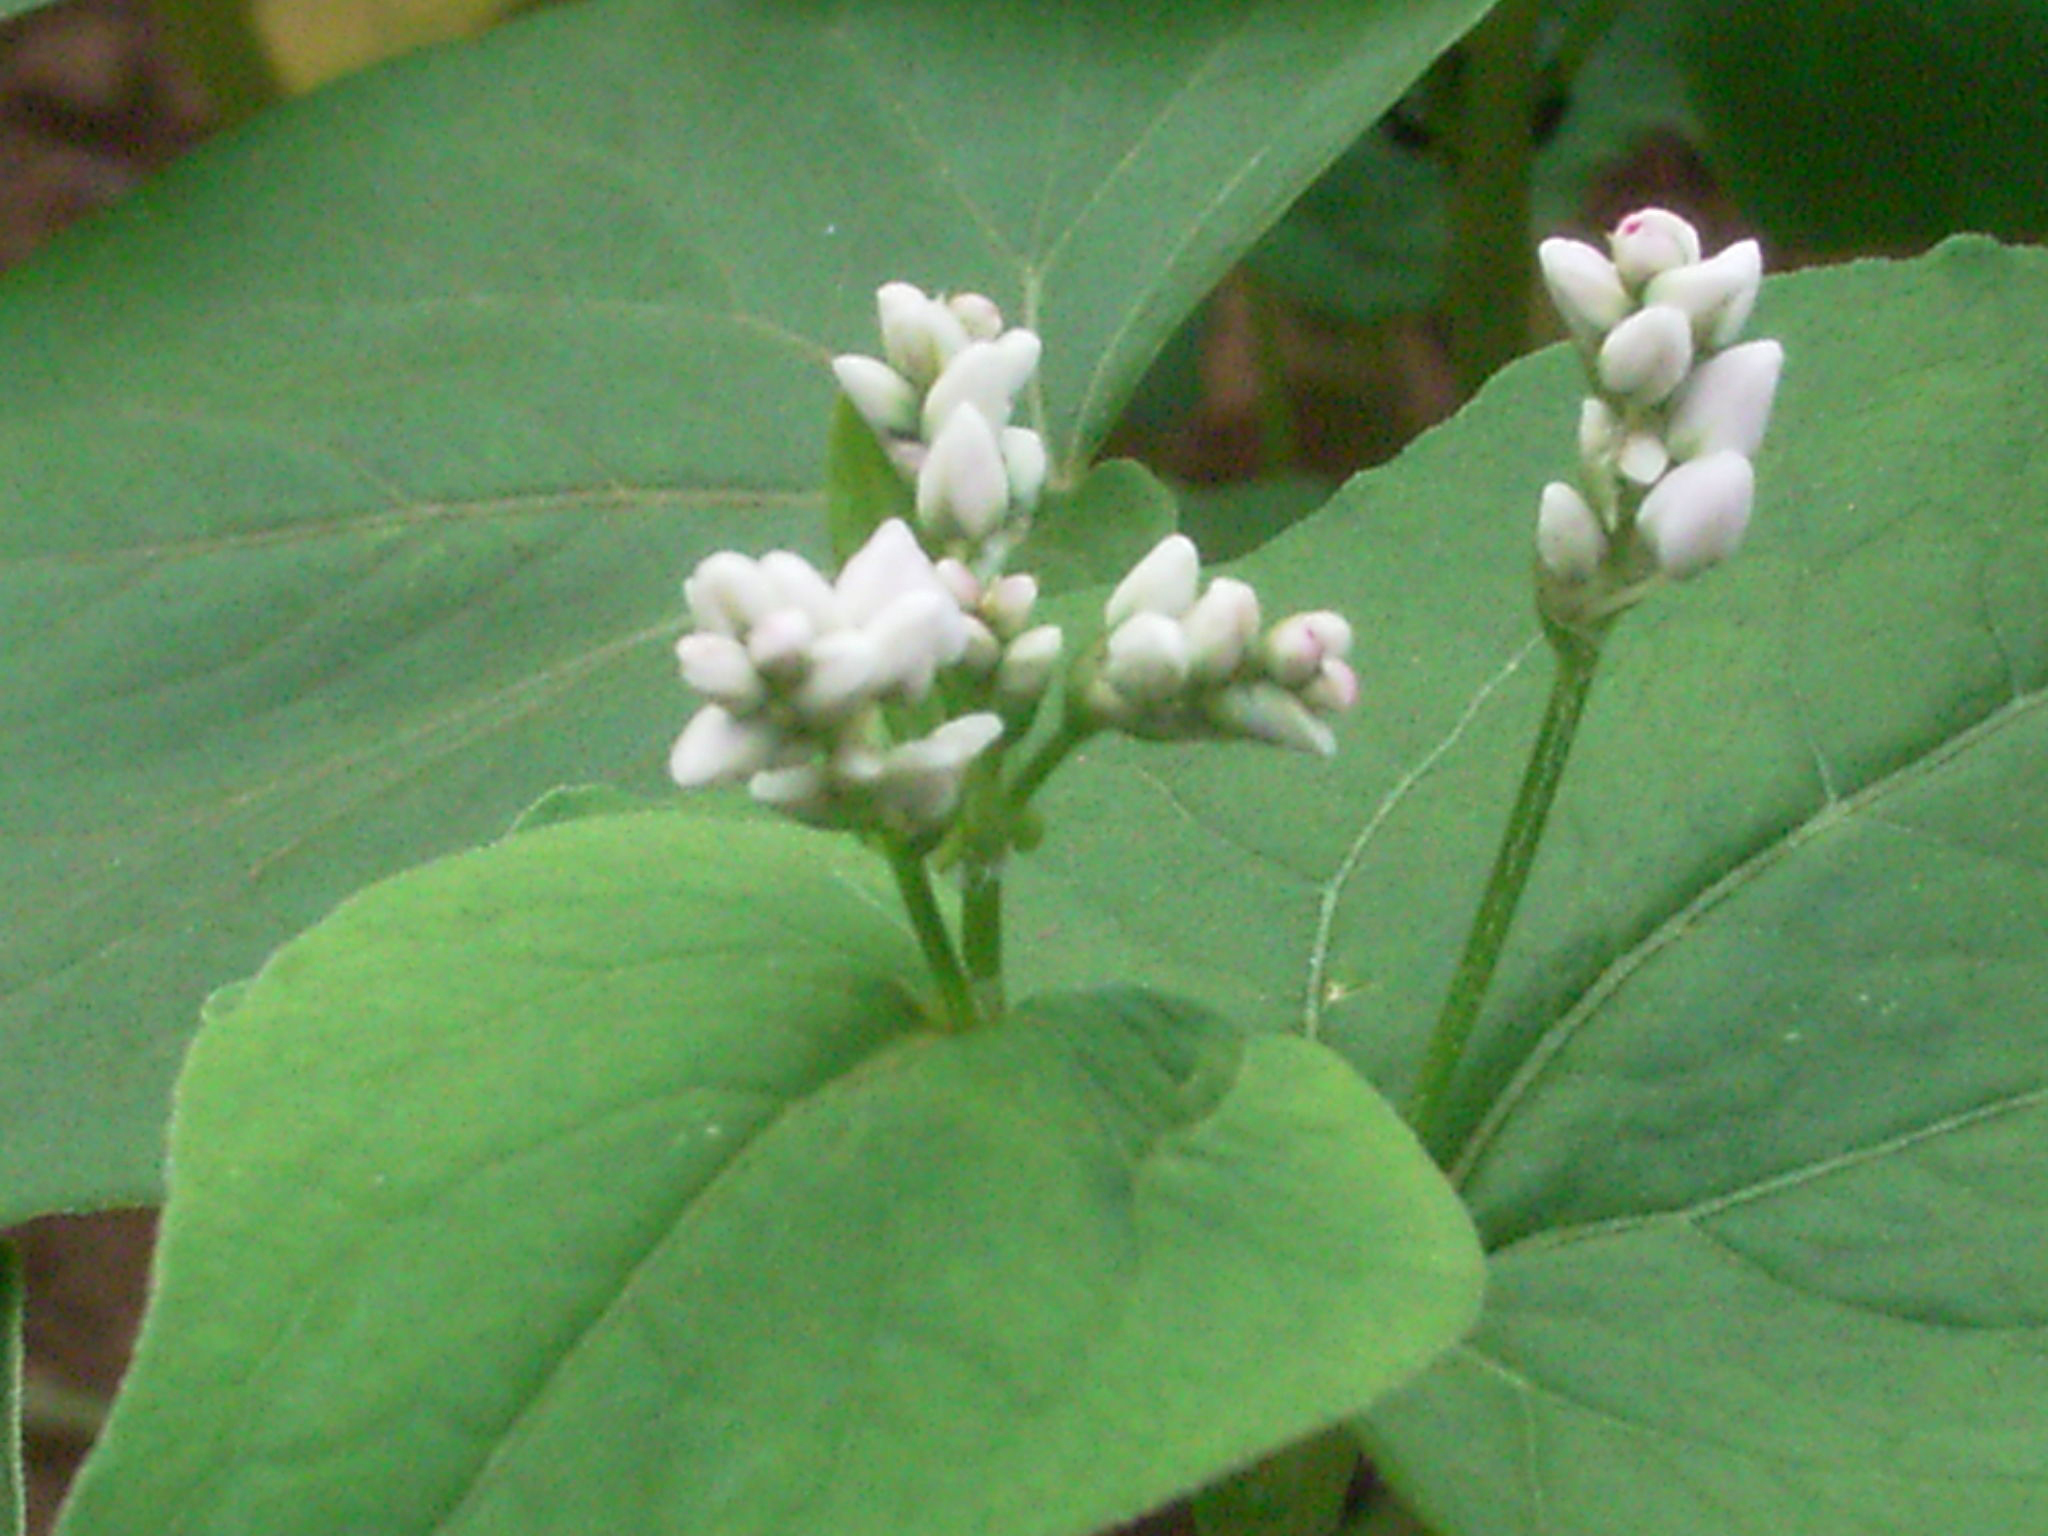 Flower-bud-of-Buckwheat